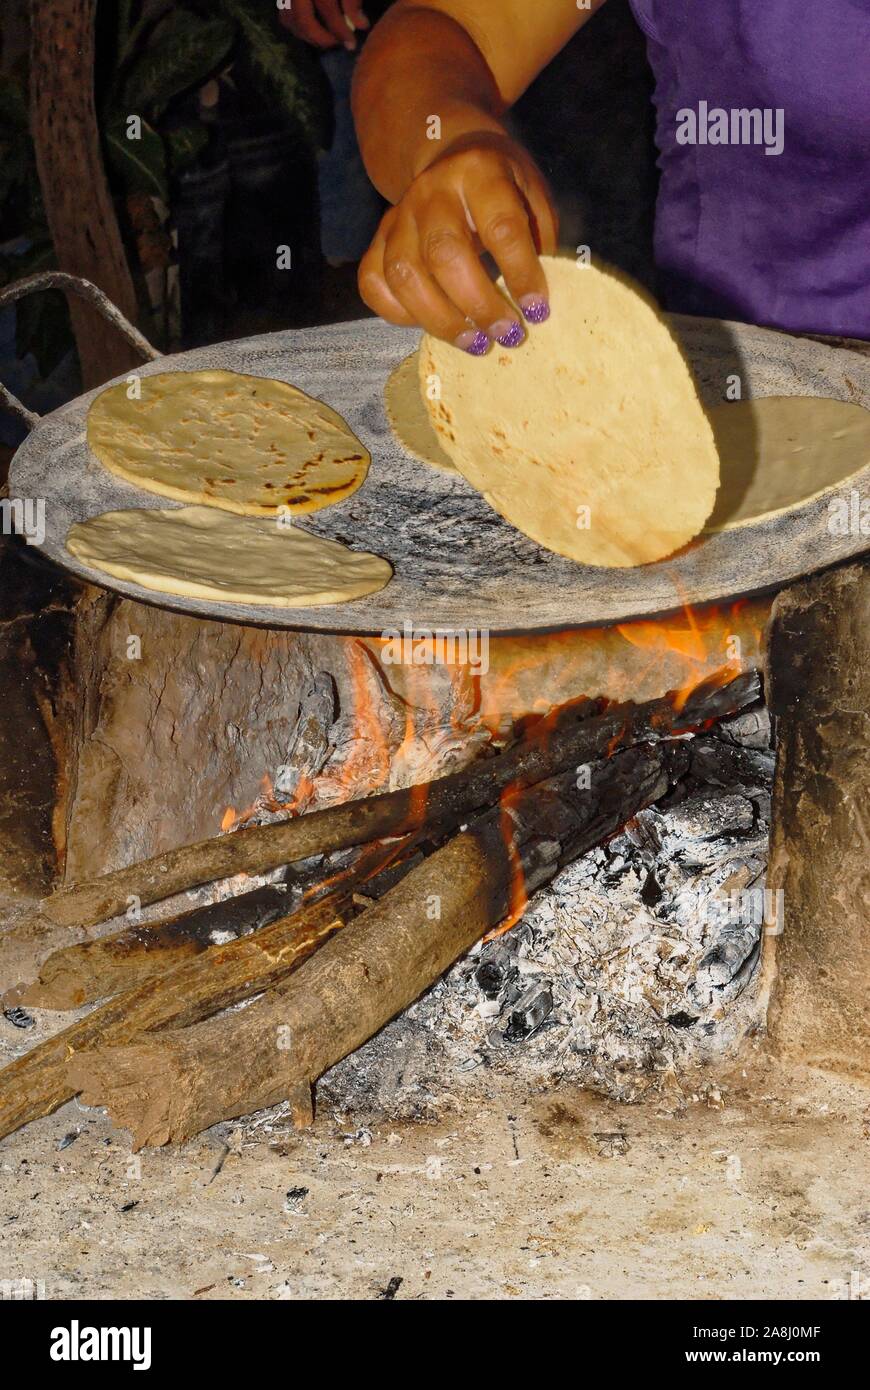 https://c8.alamy.com/comp/2A8J0MF/making-tortillas-over-a-wood-fire-in-el-fuerte-sierra-madre-occidental-sinaloa-state-mexico-2A8J0MF.jpg